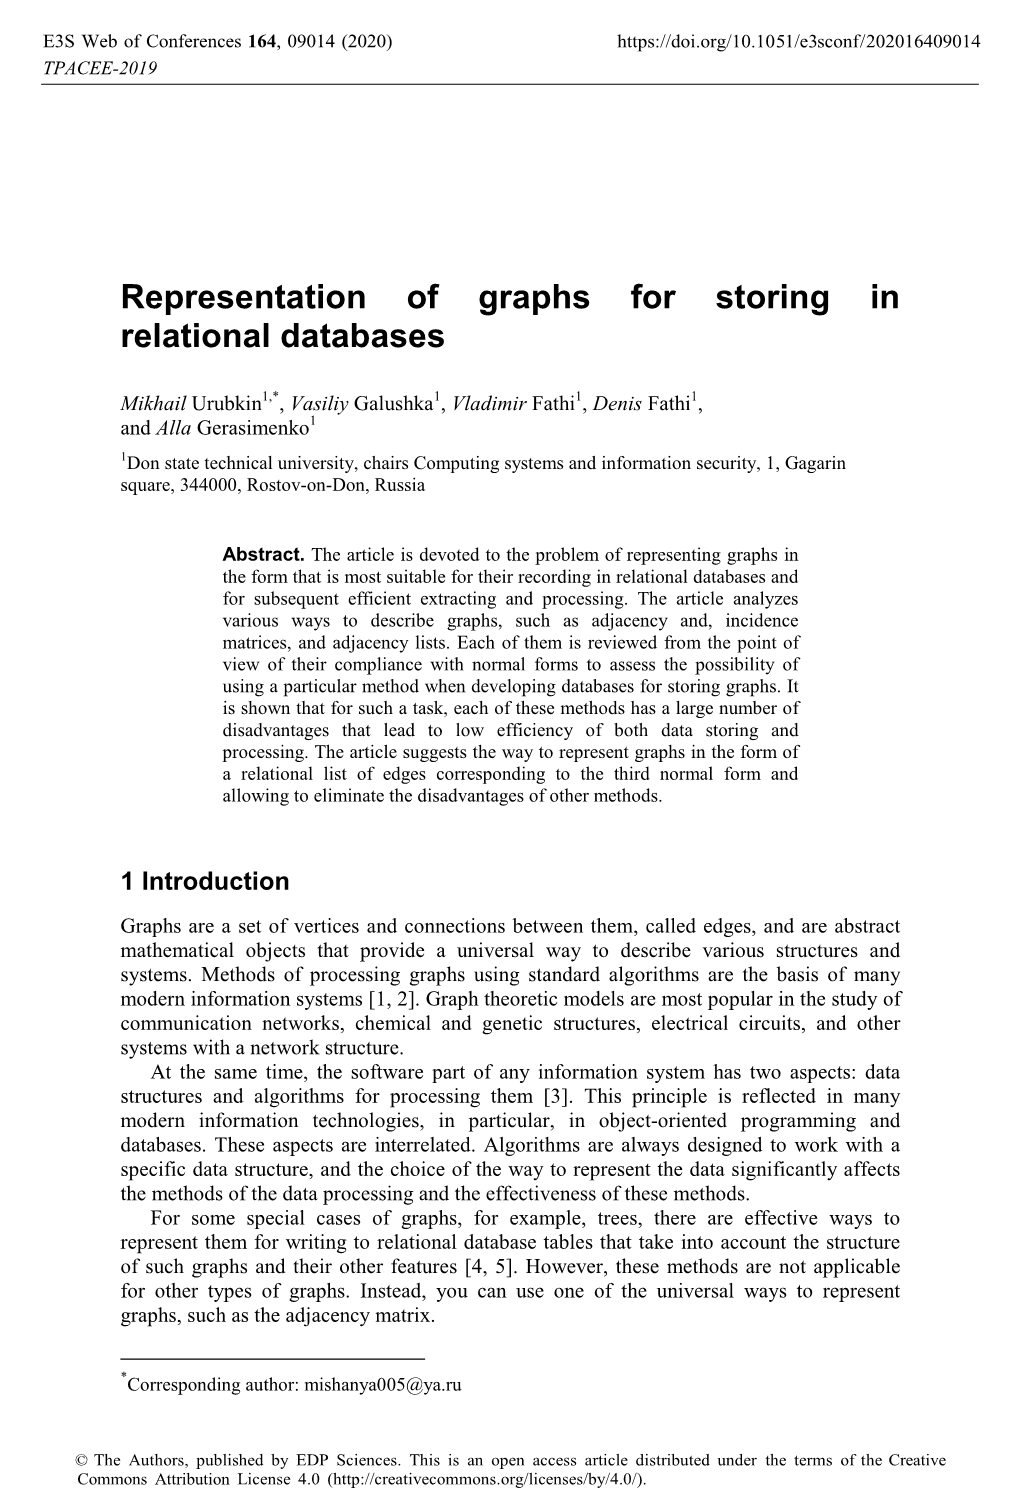 Representation of Graphs for Storing in Relational Databases